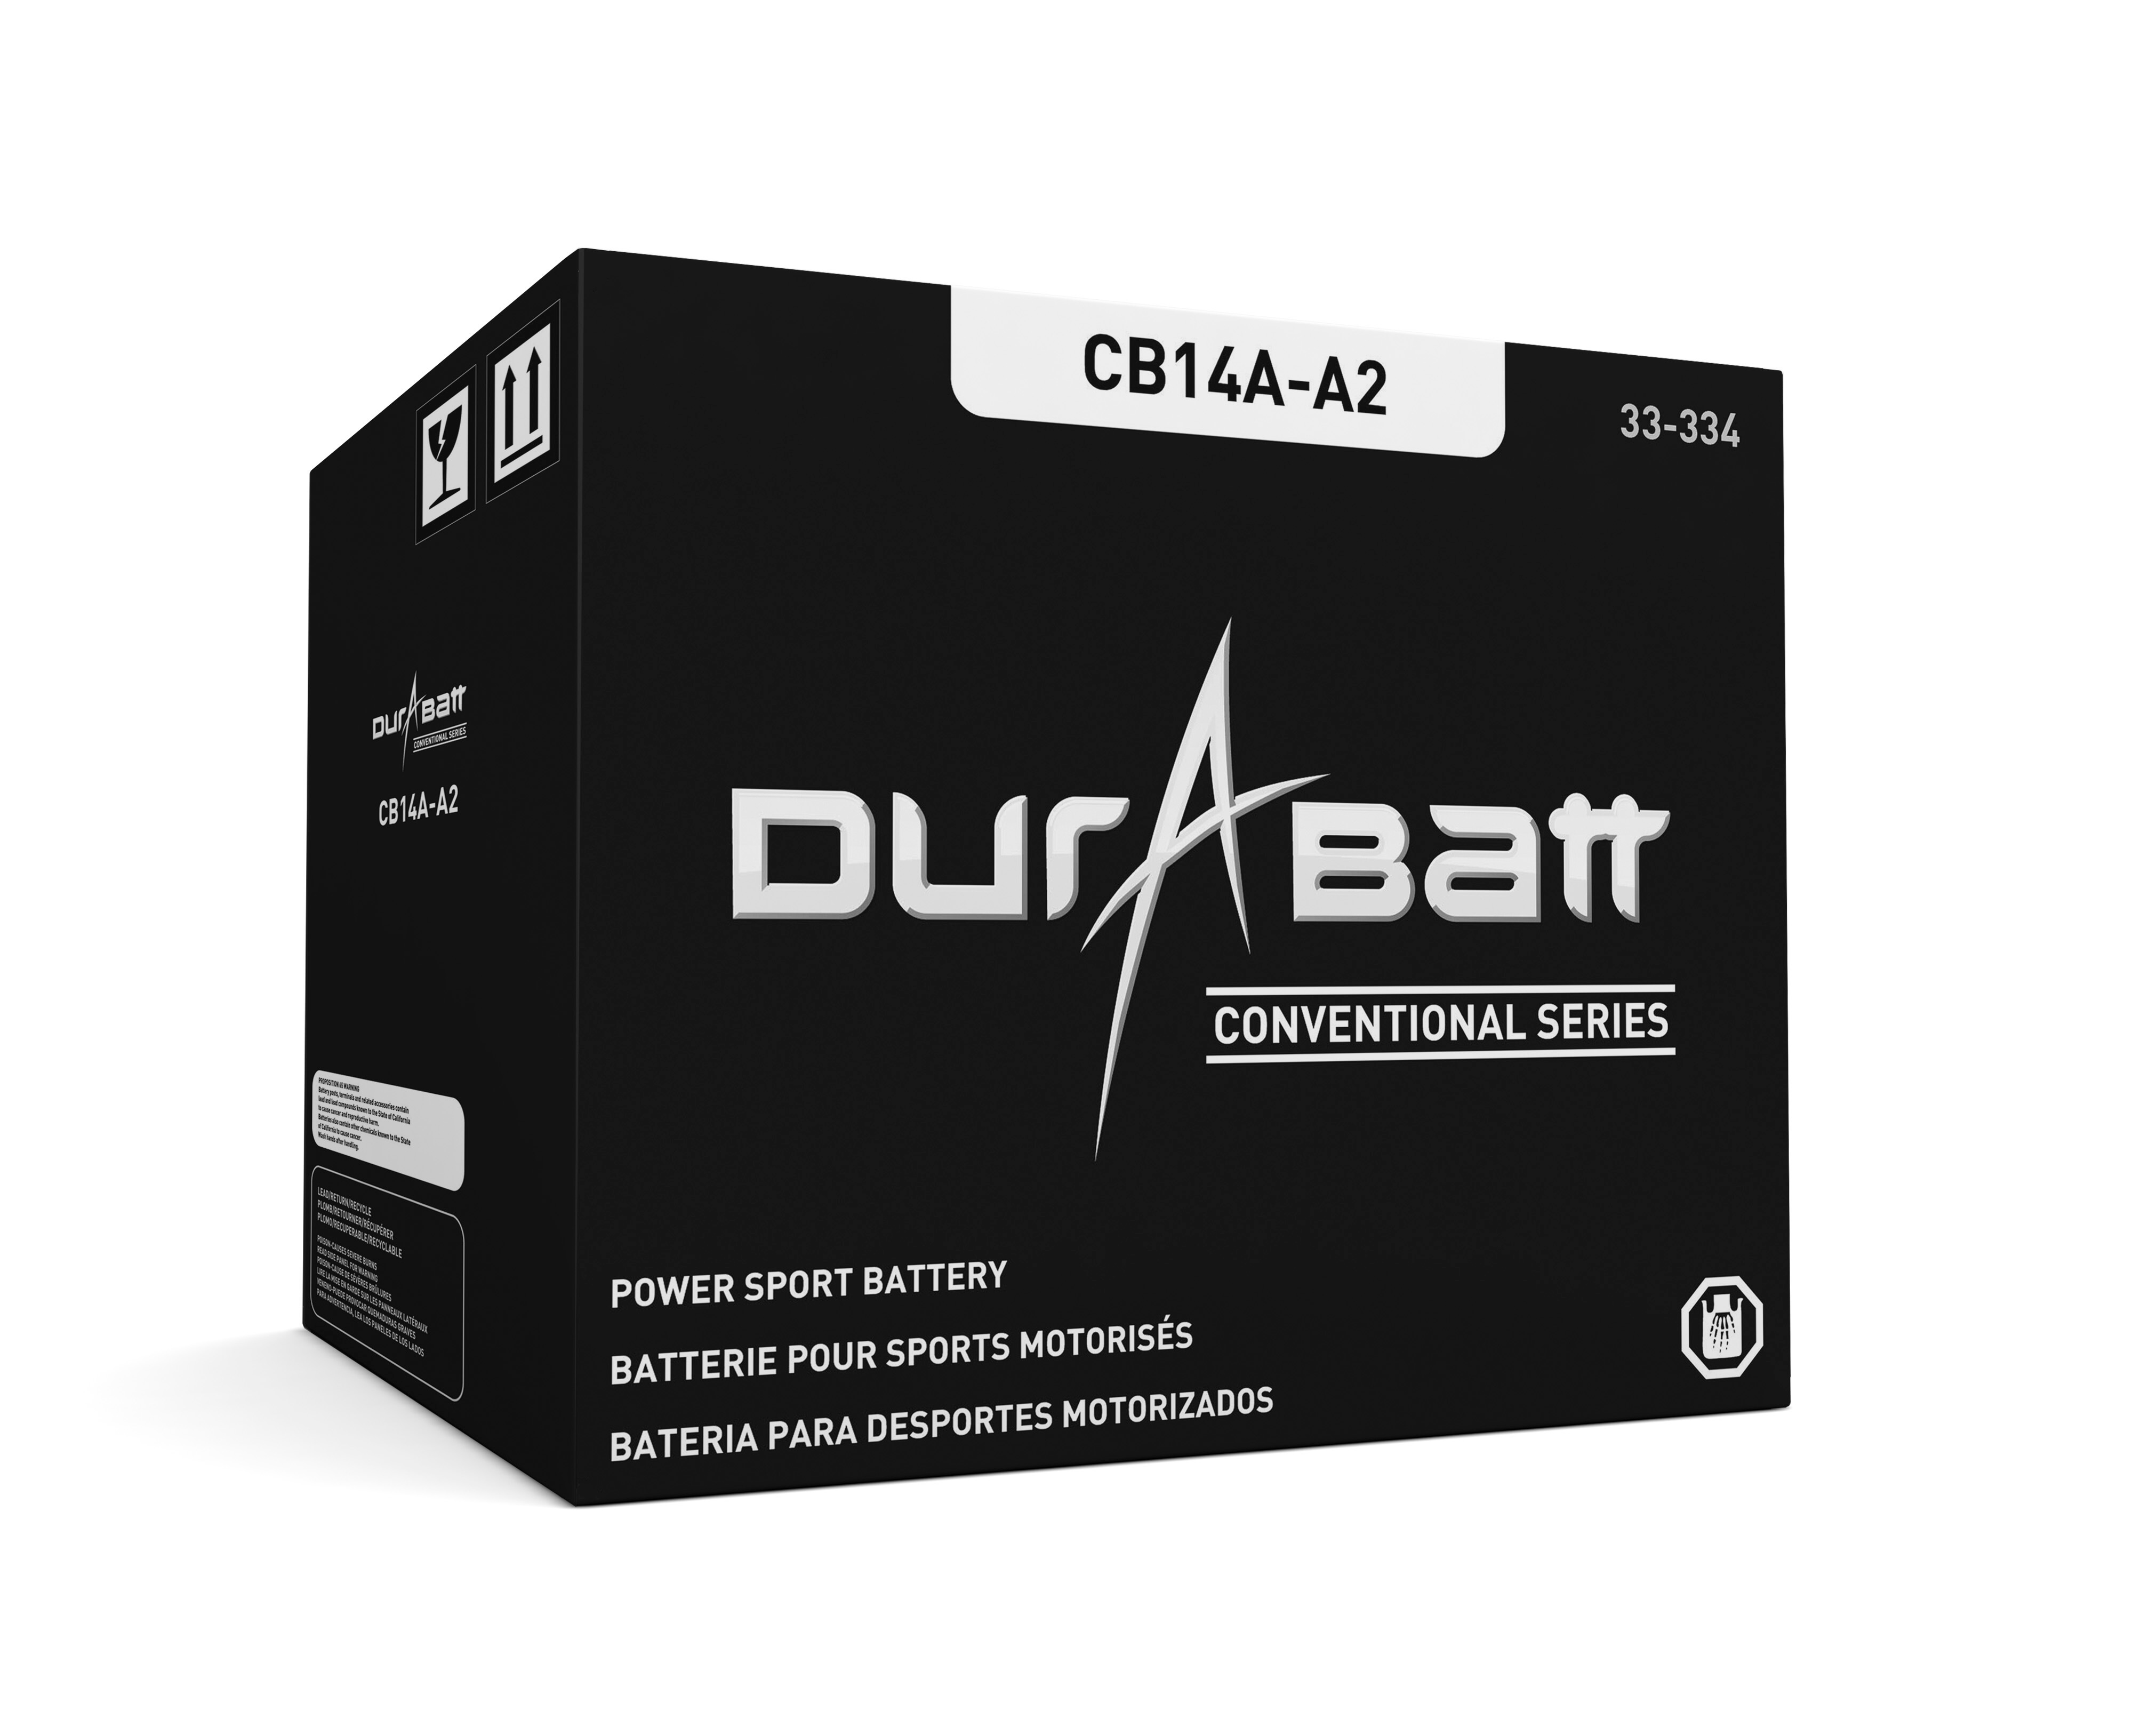 Durabatt Power Batteries - Providing Power Since 2001